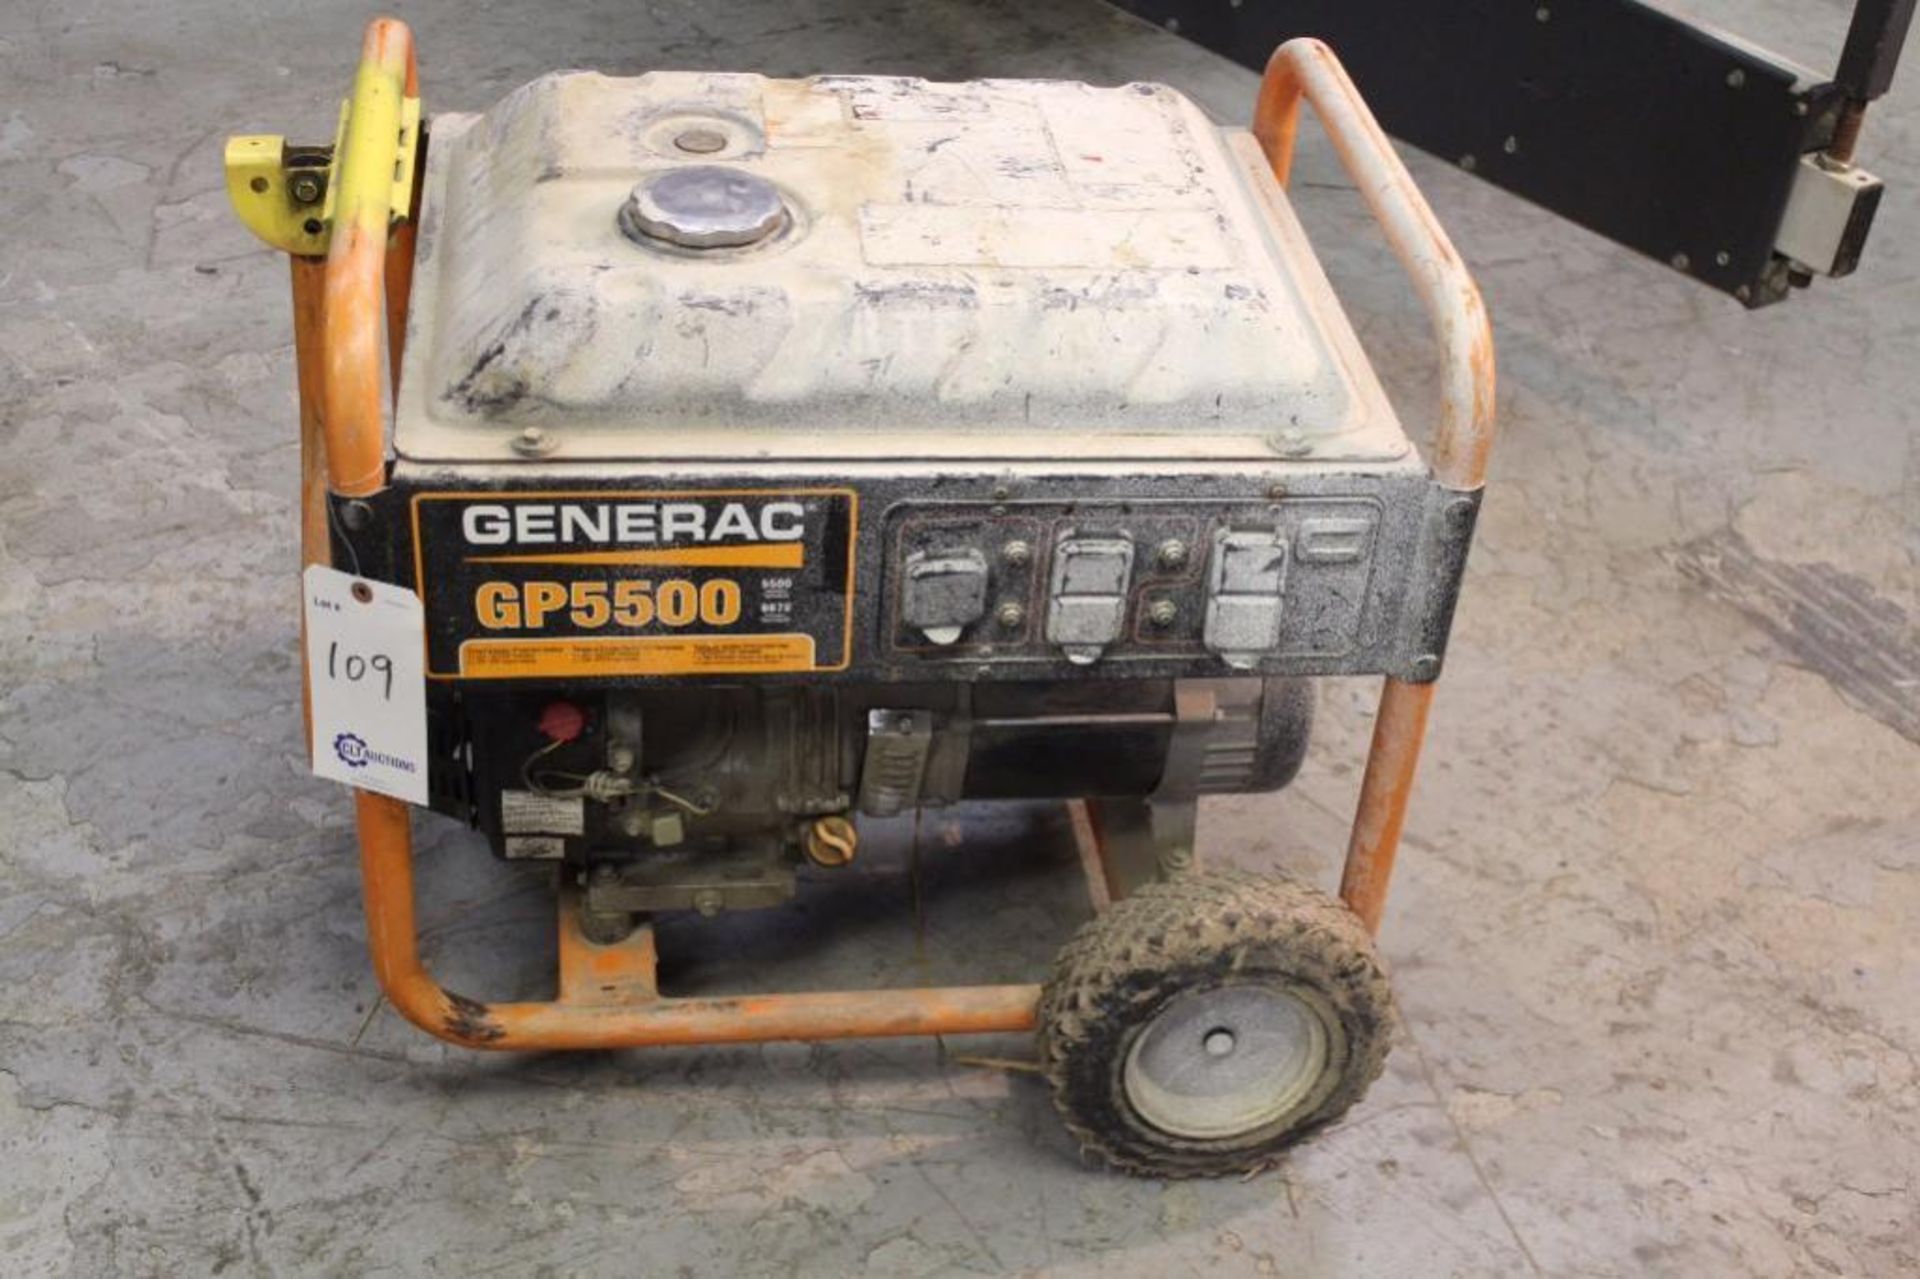 GeneracGP5500generator. Gas powered, 5500watts